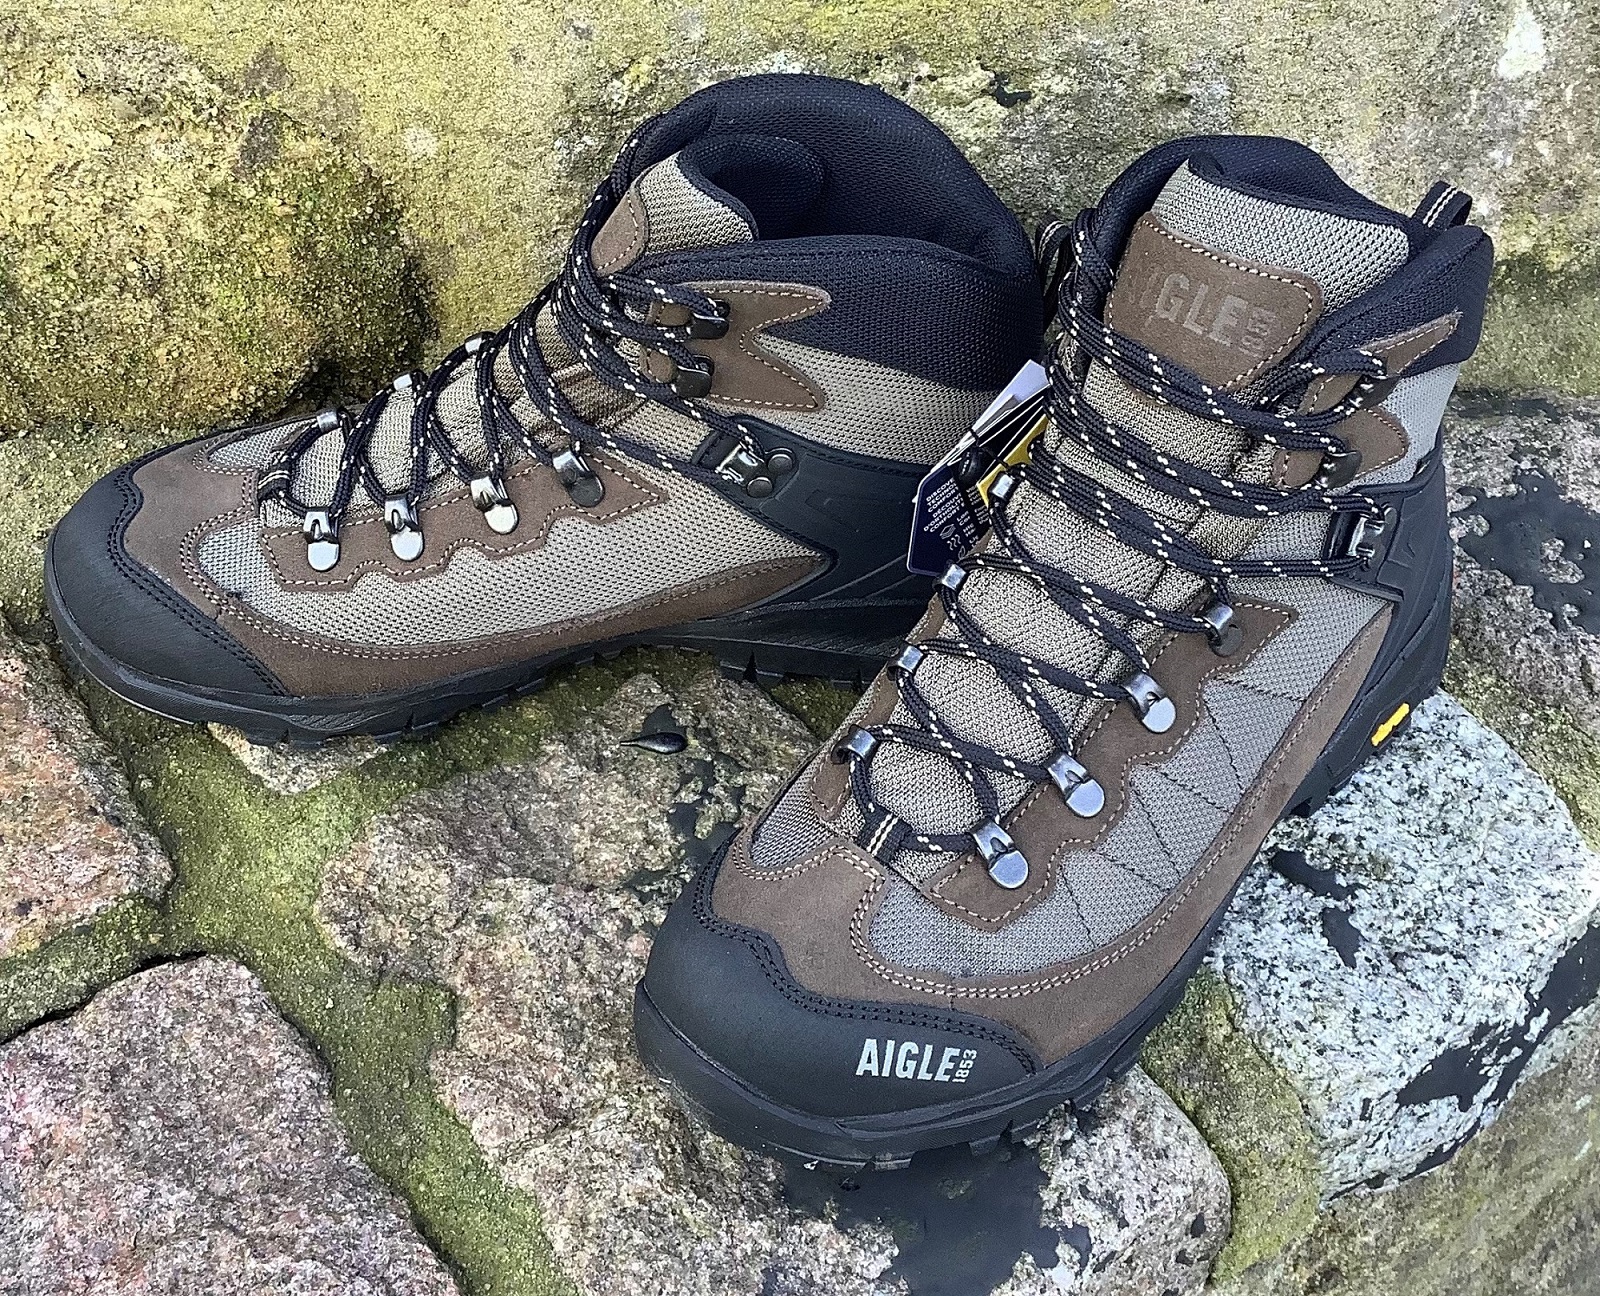 Aigle Sonricker Walking Boot - The Ilkley Shoe Company